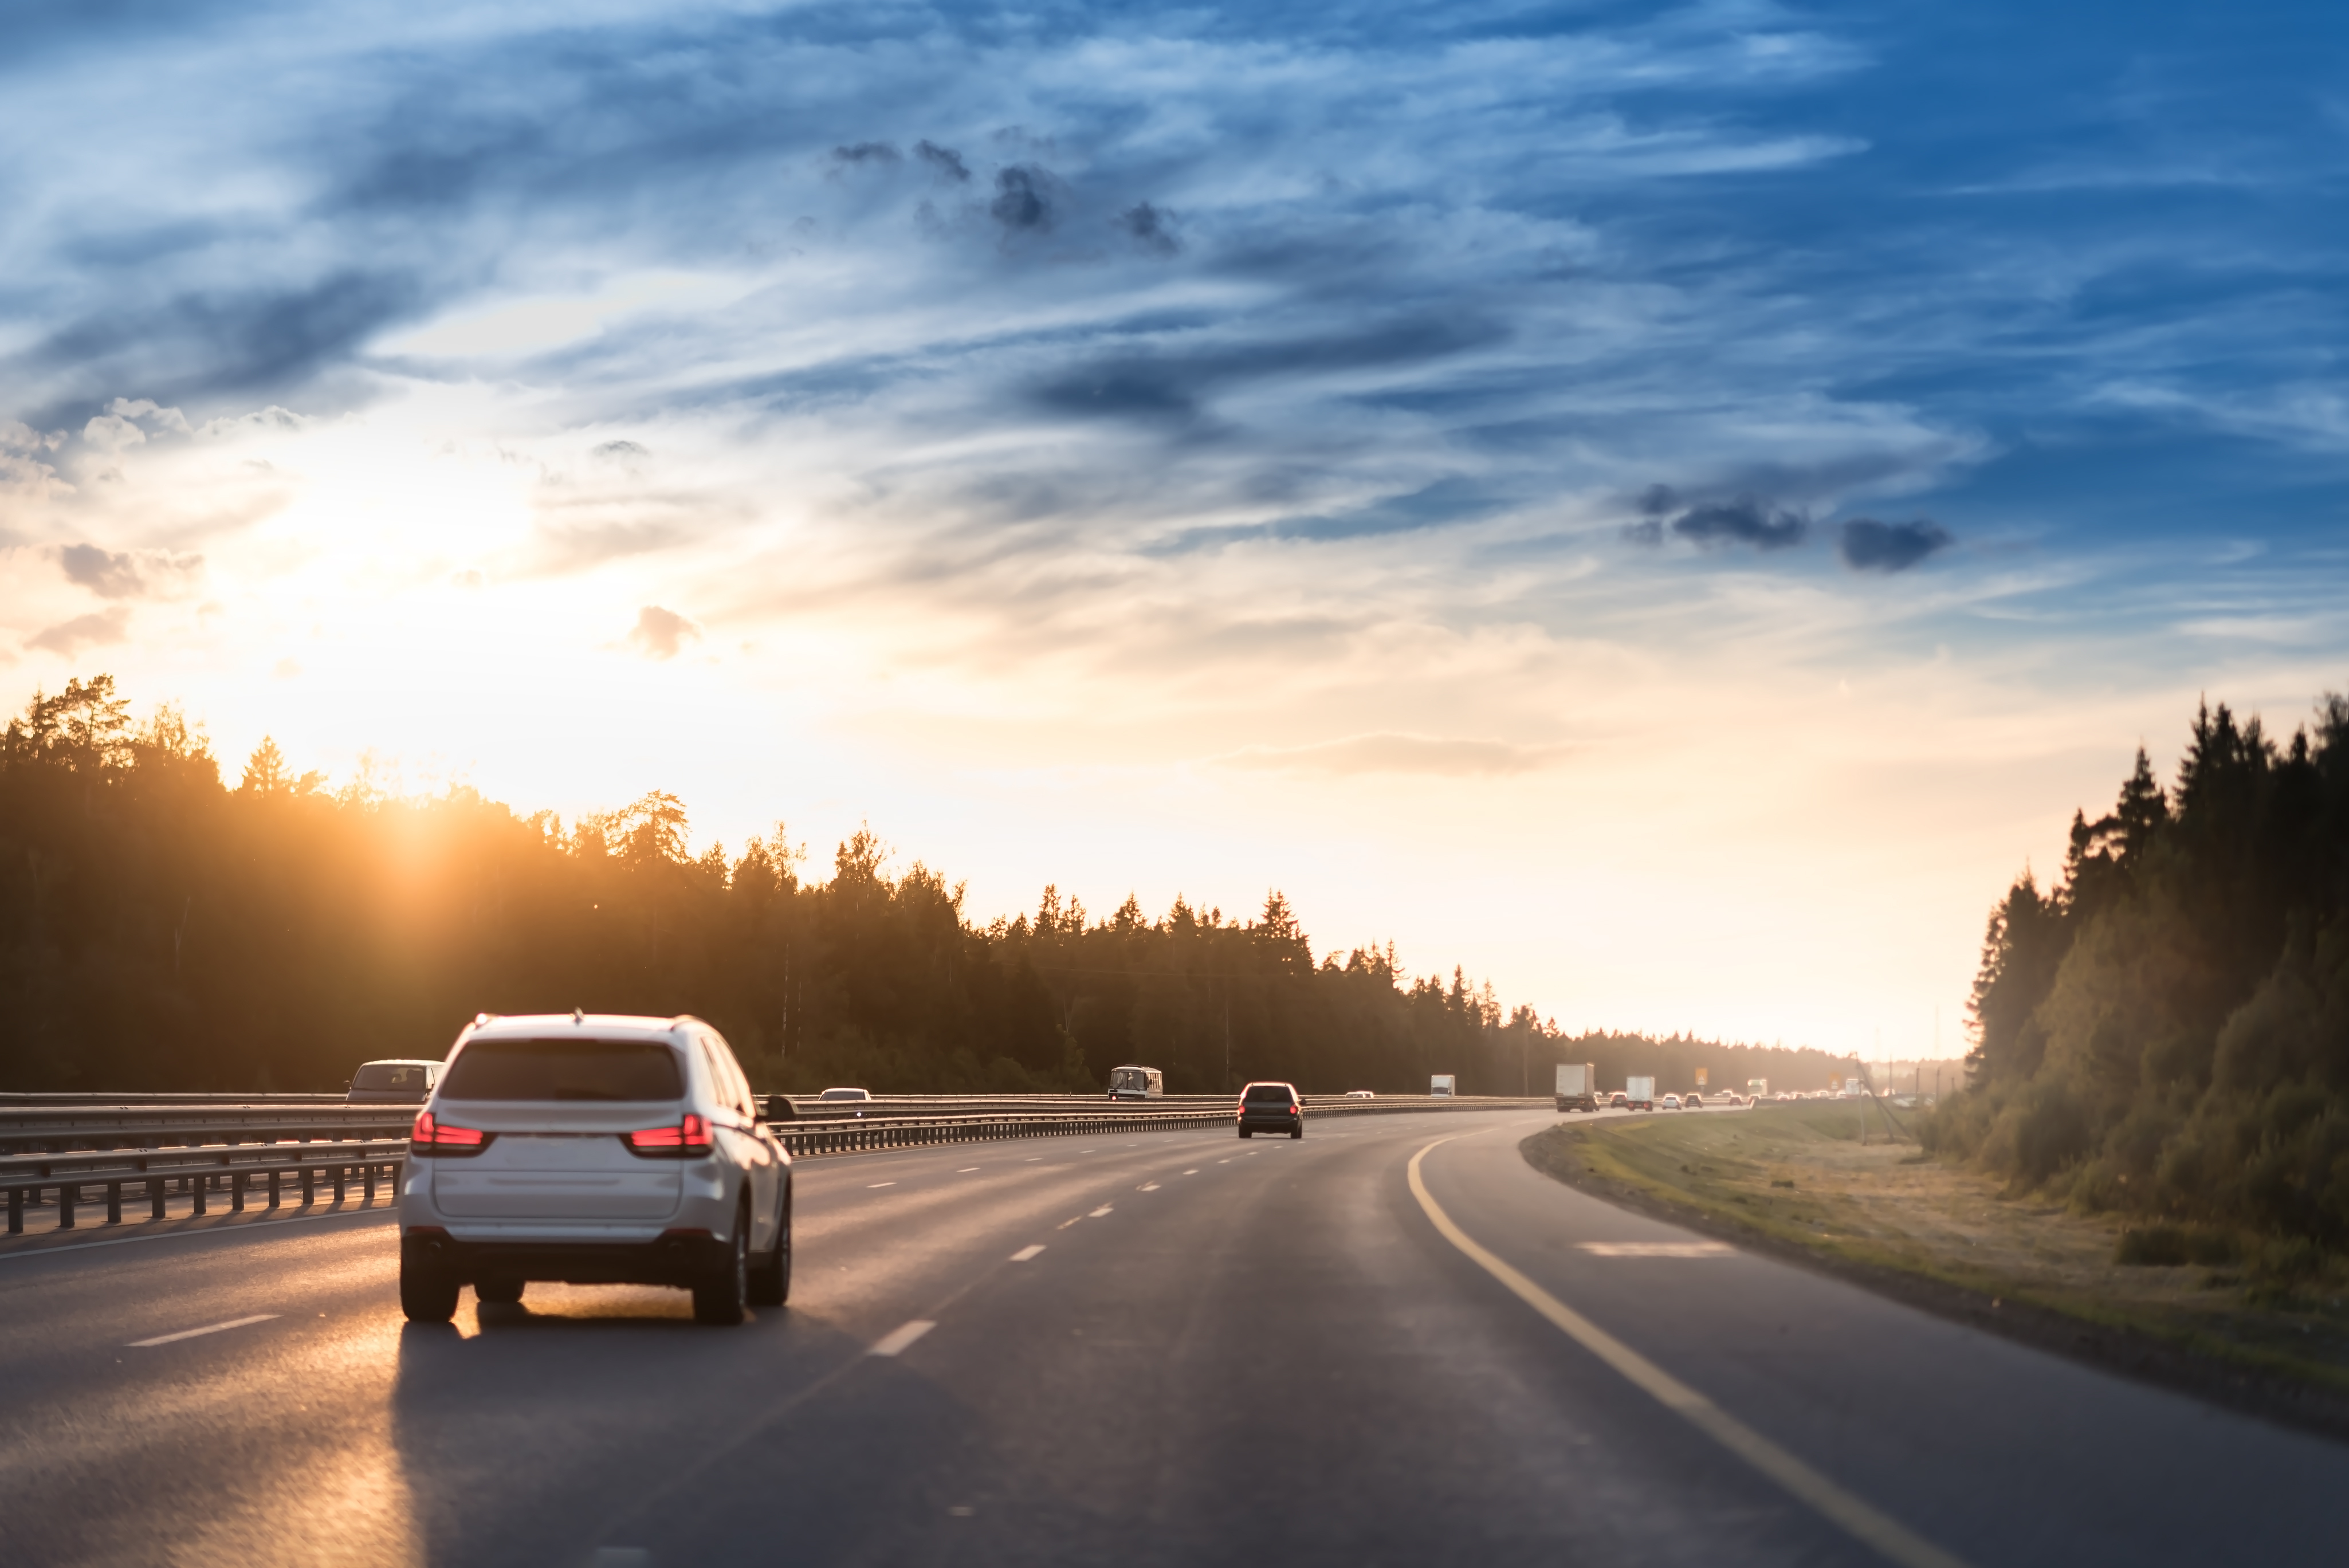 Highway traffic in sunset. | Source: Shutterstock